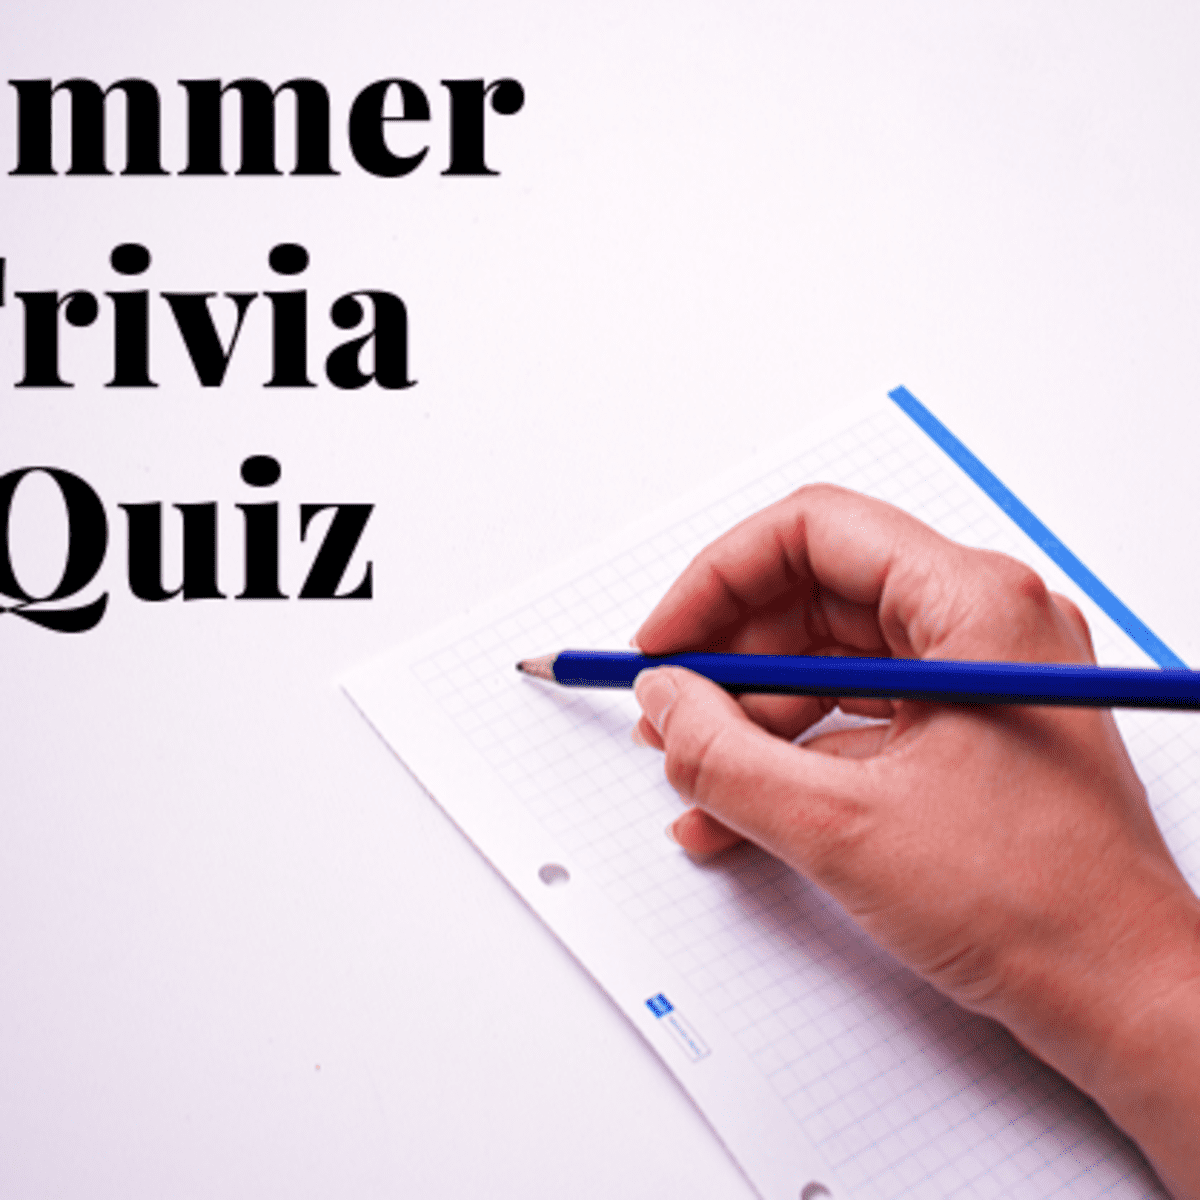 An All About Summer Trivia Quiz Hobbylark